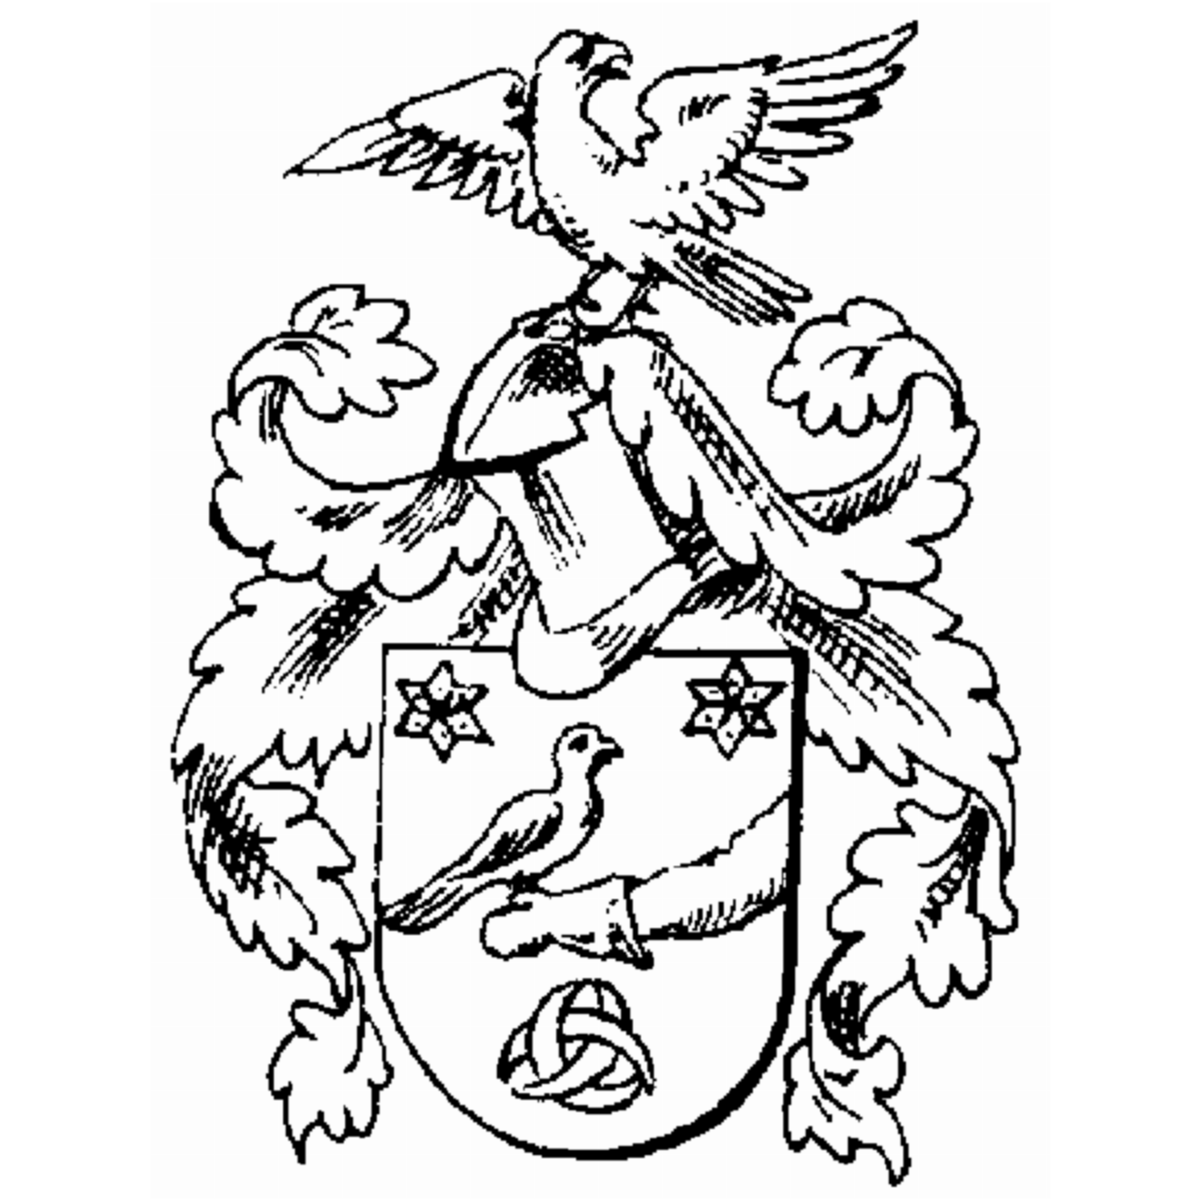 Wappen der Familie Maybach